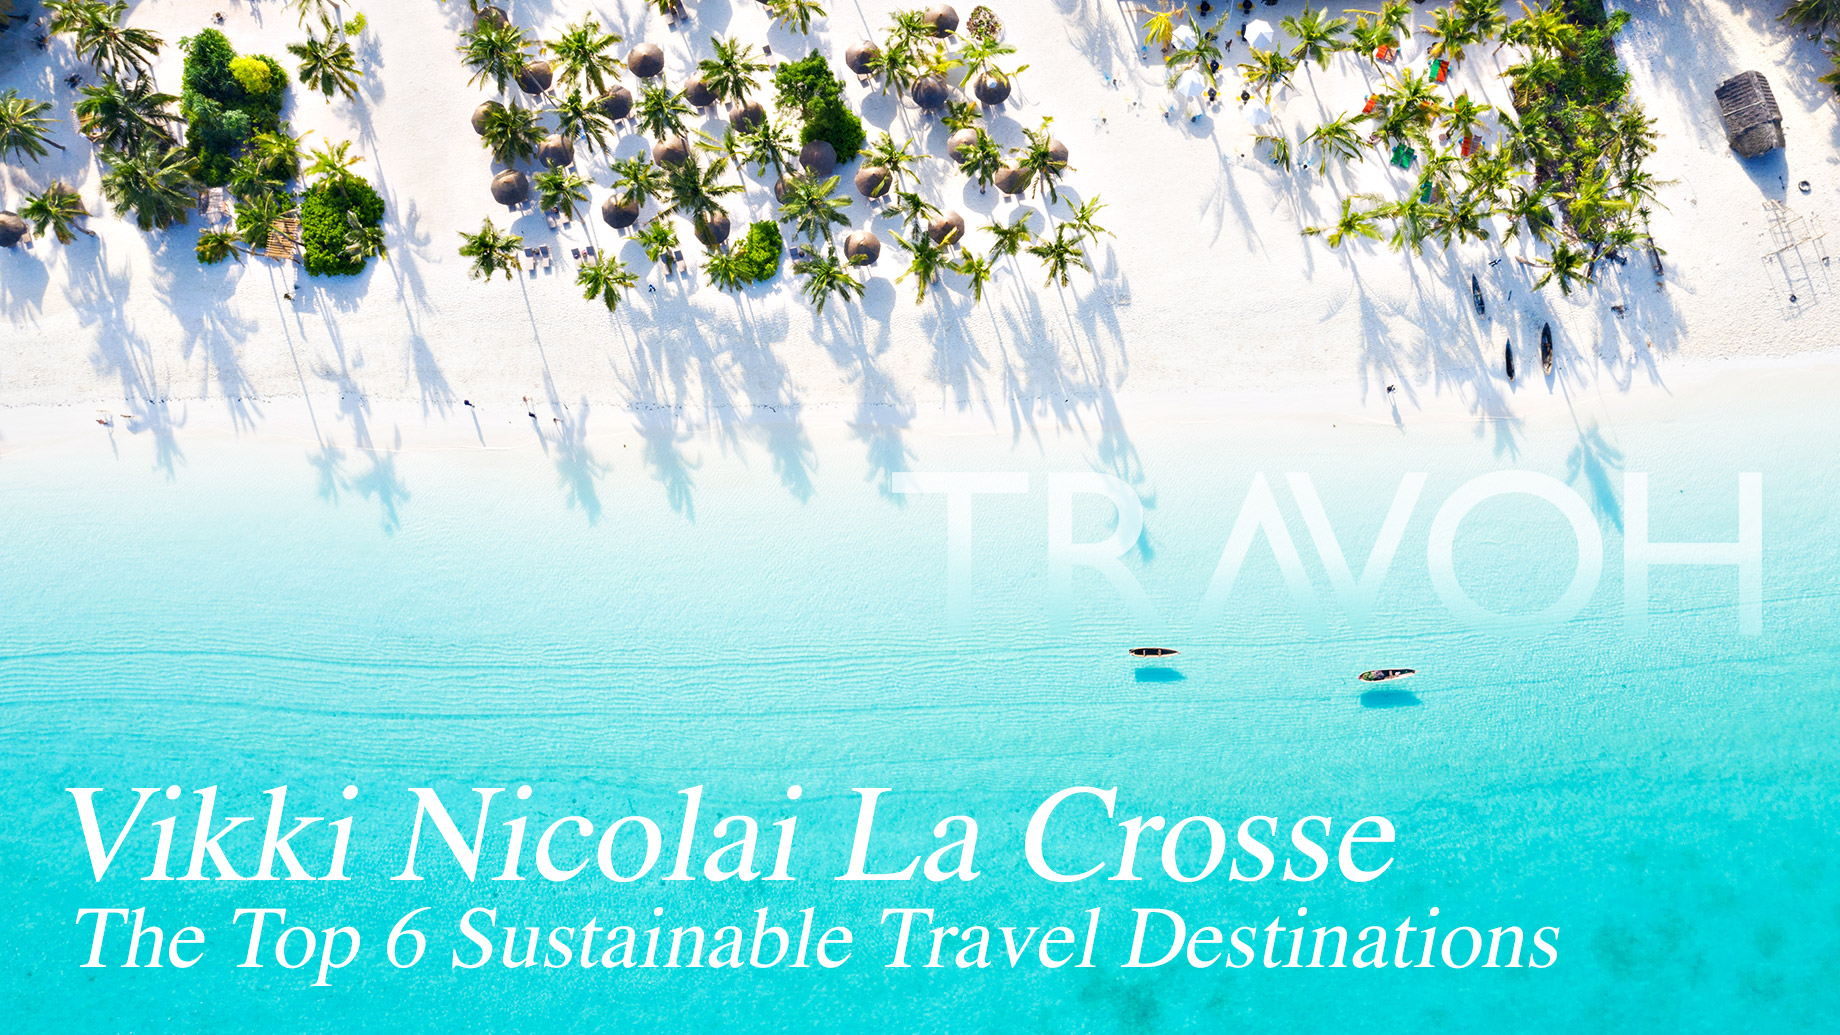 Vikki Nicolai La Crosse Shares The Top 6 Sustainable Travel Destinations